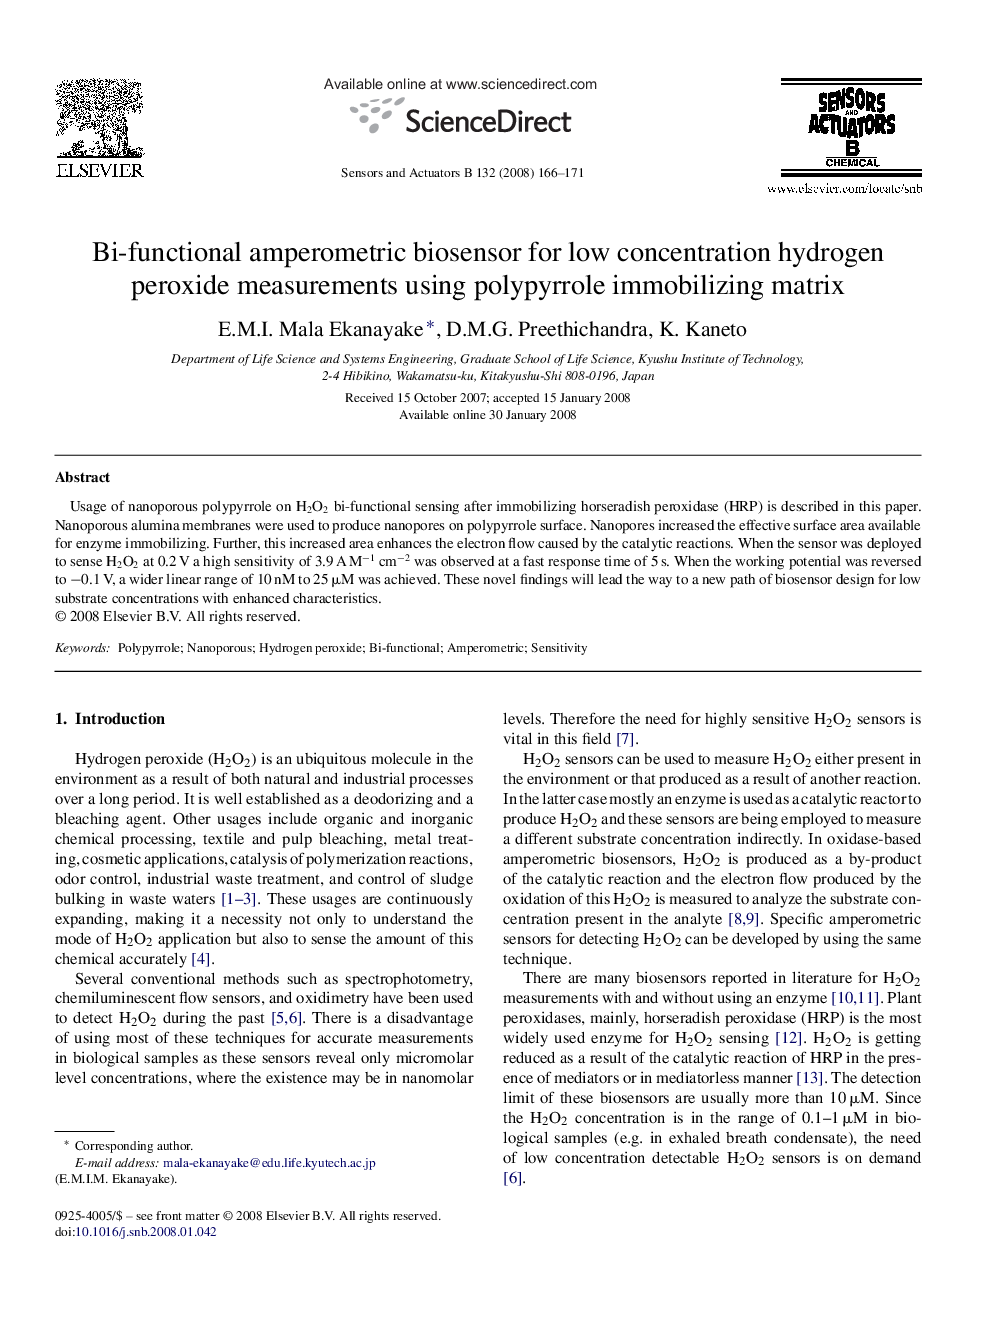 Bi-functional amperometric biosensor for low concentration hydrogen peroxide measurements using polypyrrole immobilizing matrix